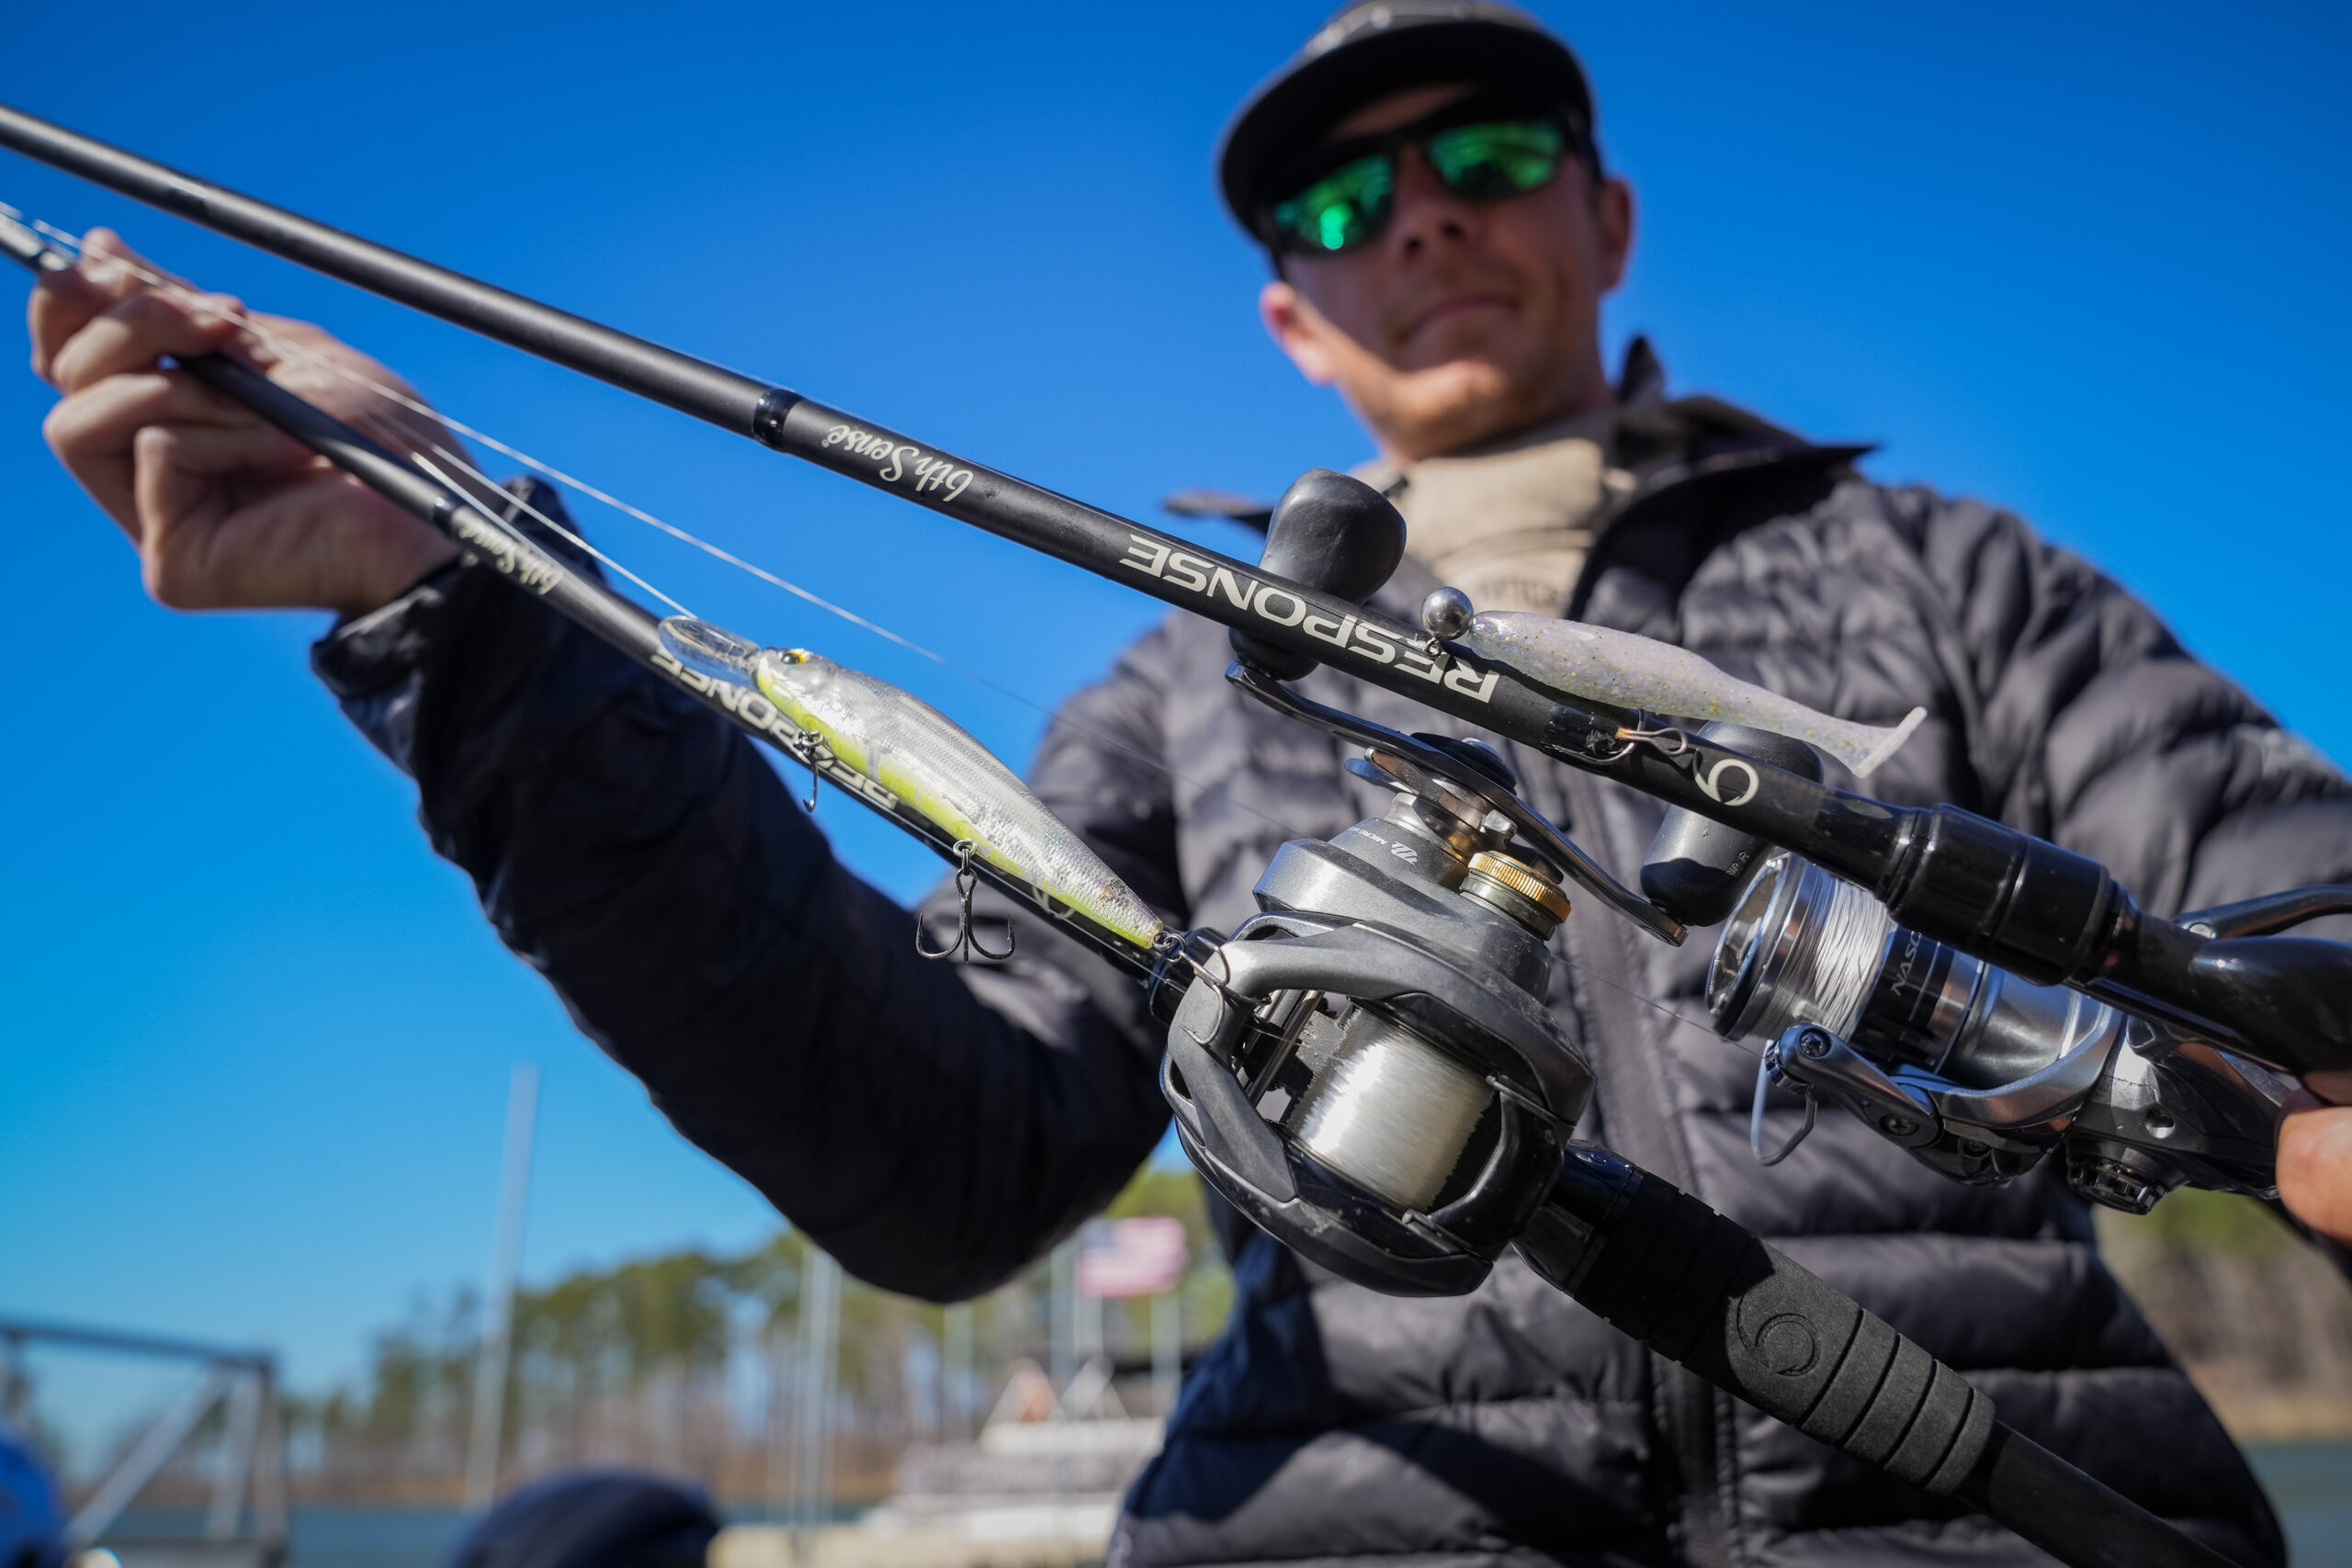 Top 10 baits from Sam Rayburn - Major League Fishing